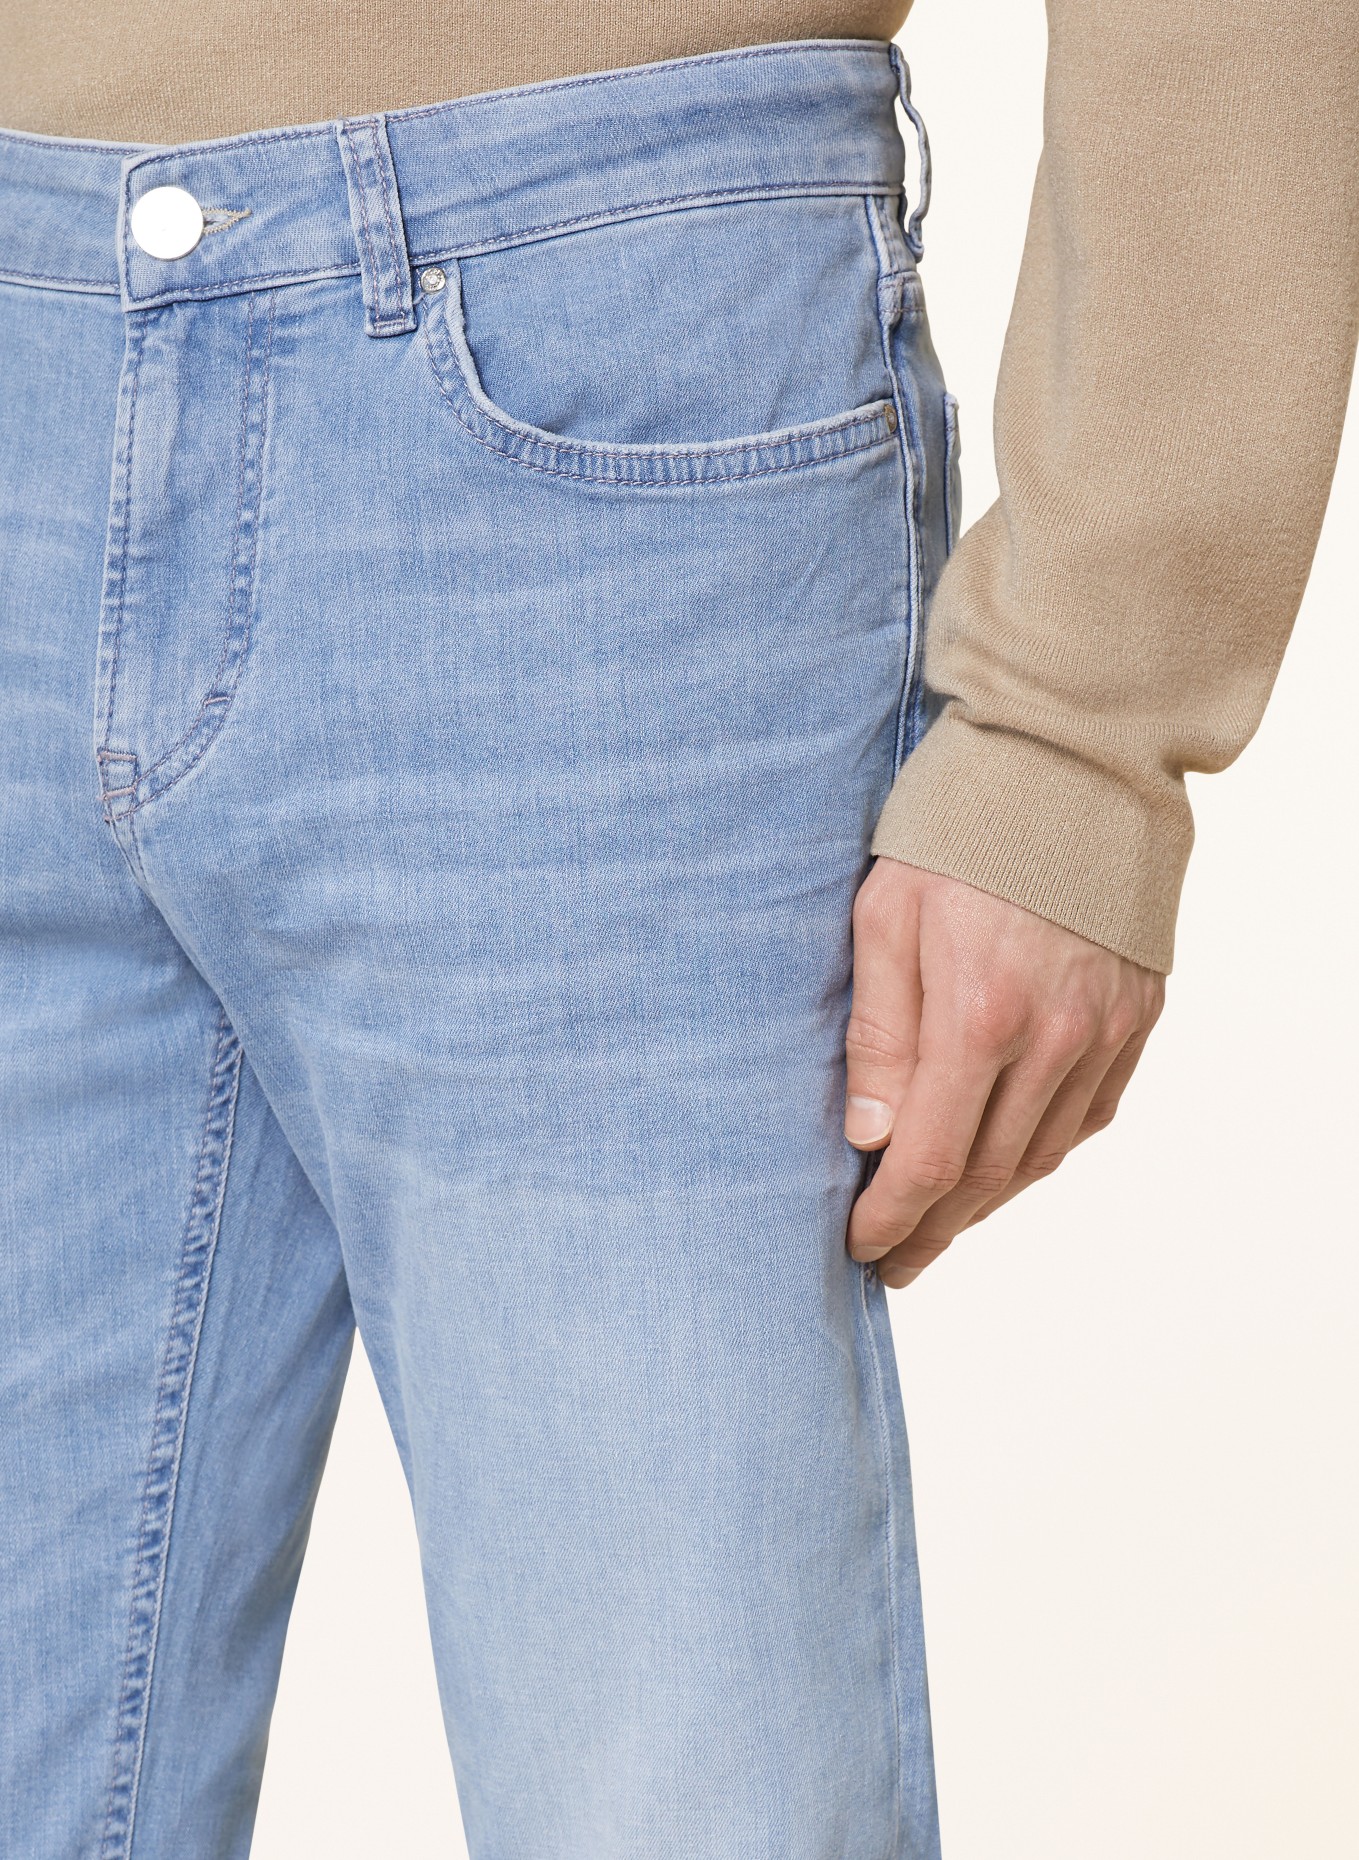 JOOP! JEANS Jeans MITCH Modern Fit, Farbe: 445 TurquoiseAqua              445 (Bild 5)